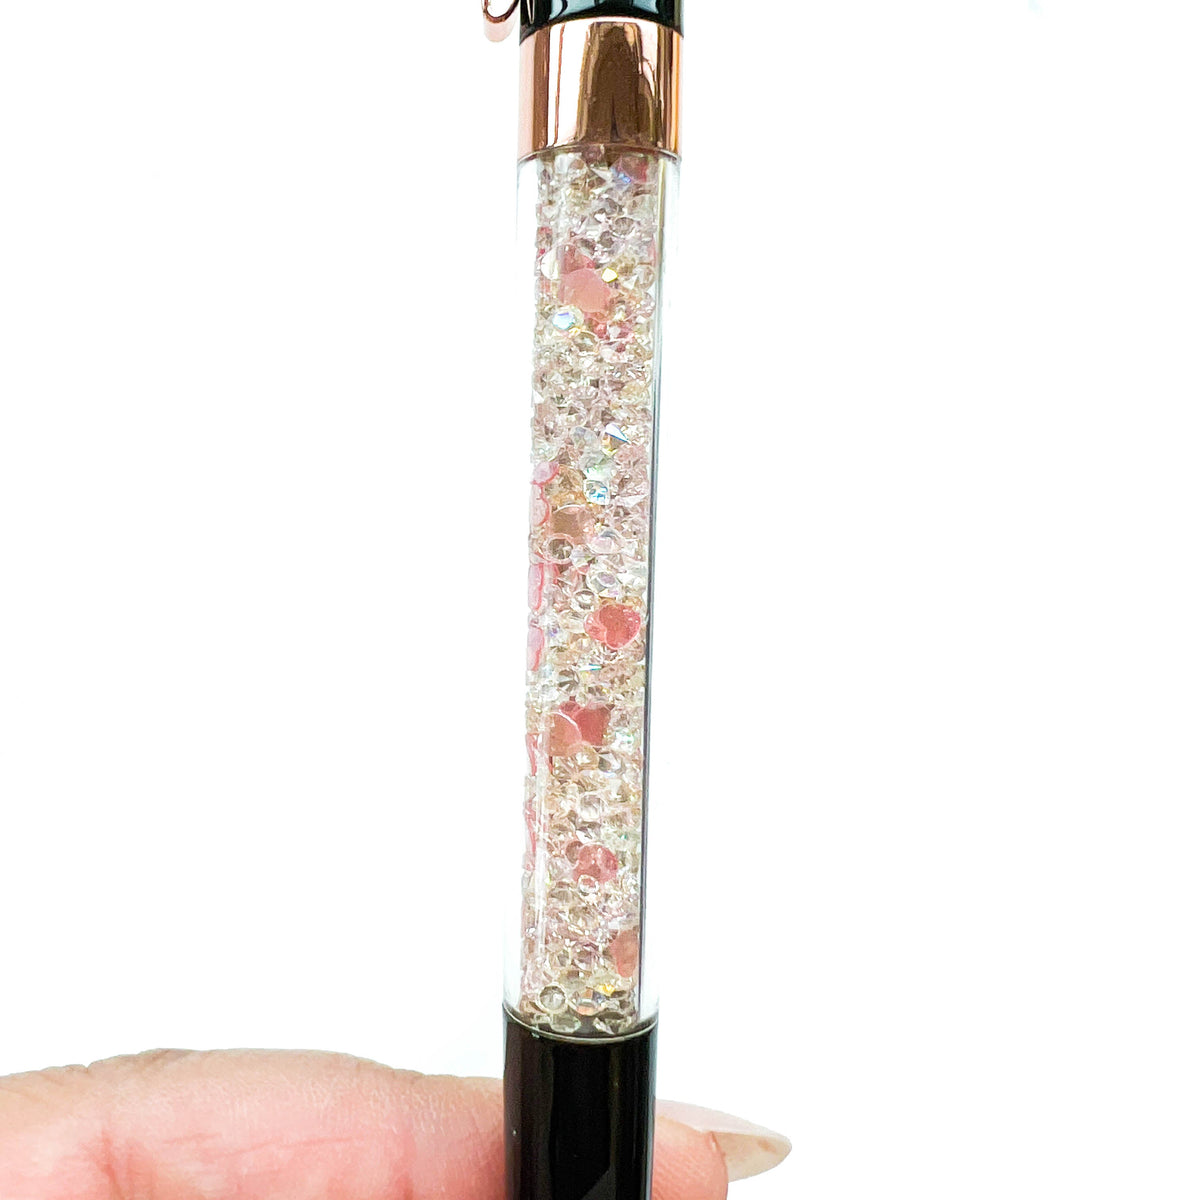 Ooh La La Imperfect Crystal VBPen | limited kit pen